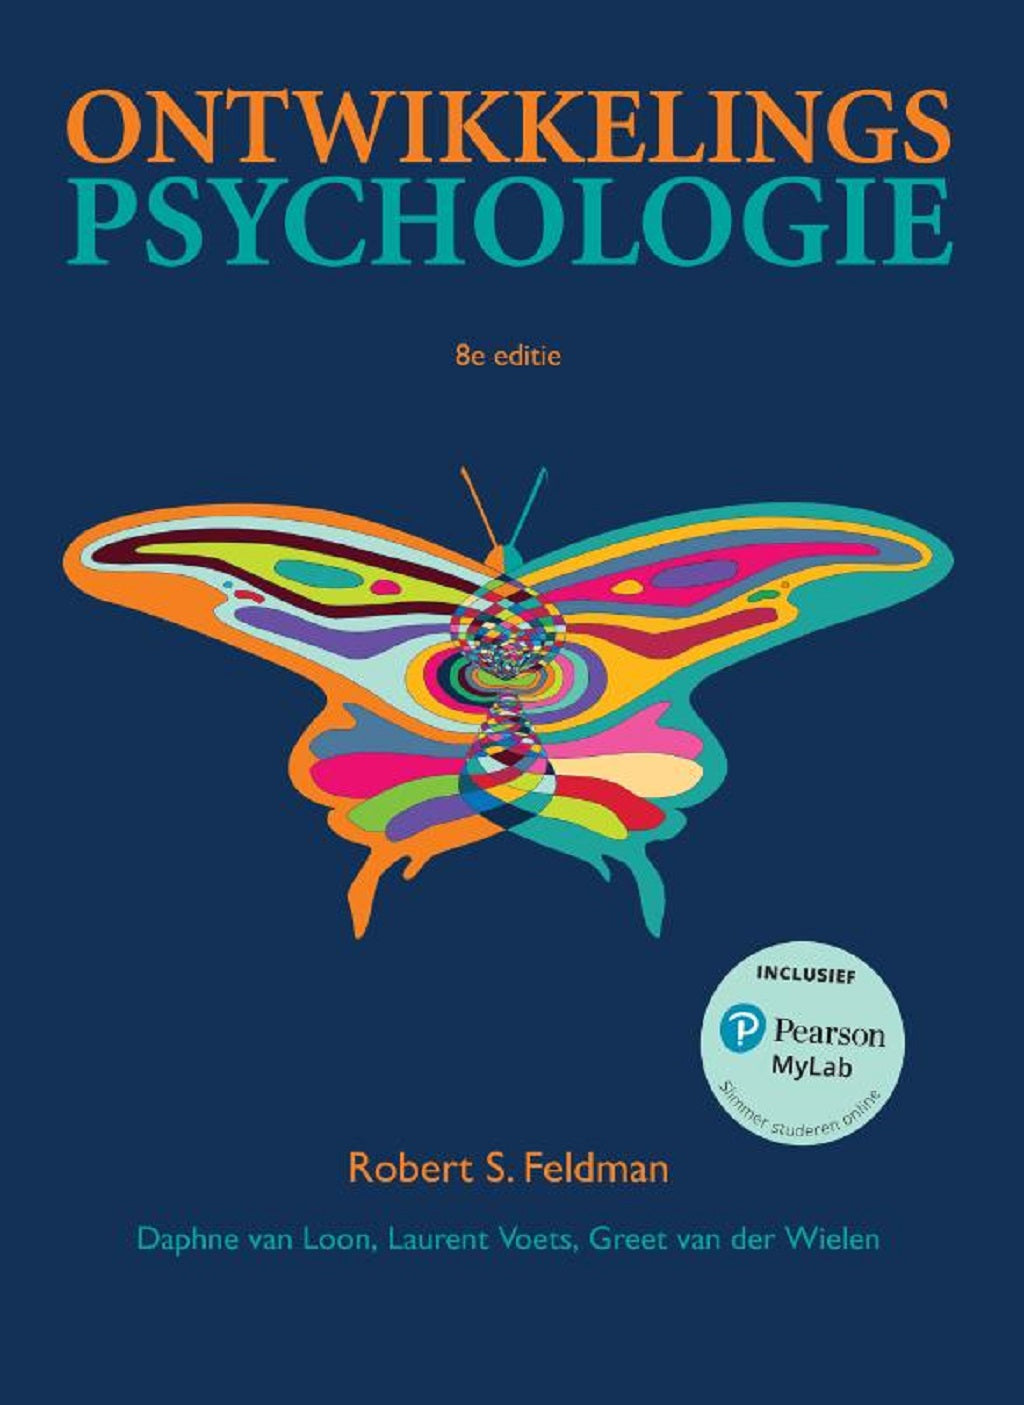 Ontwikkelingspsychologie, 8e editie (Print boek + MyLab toegangscode)